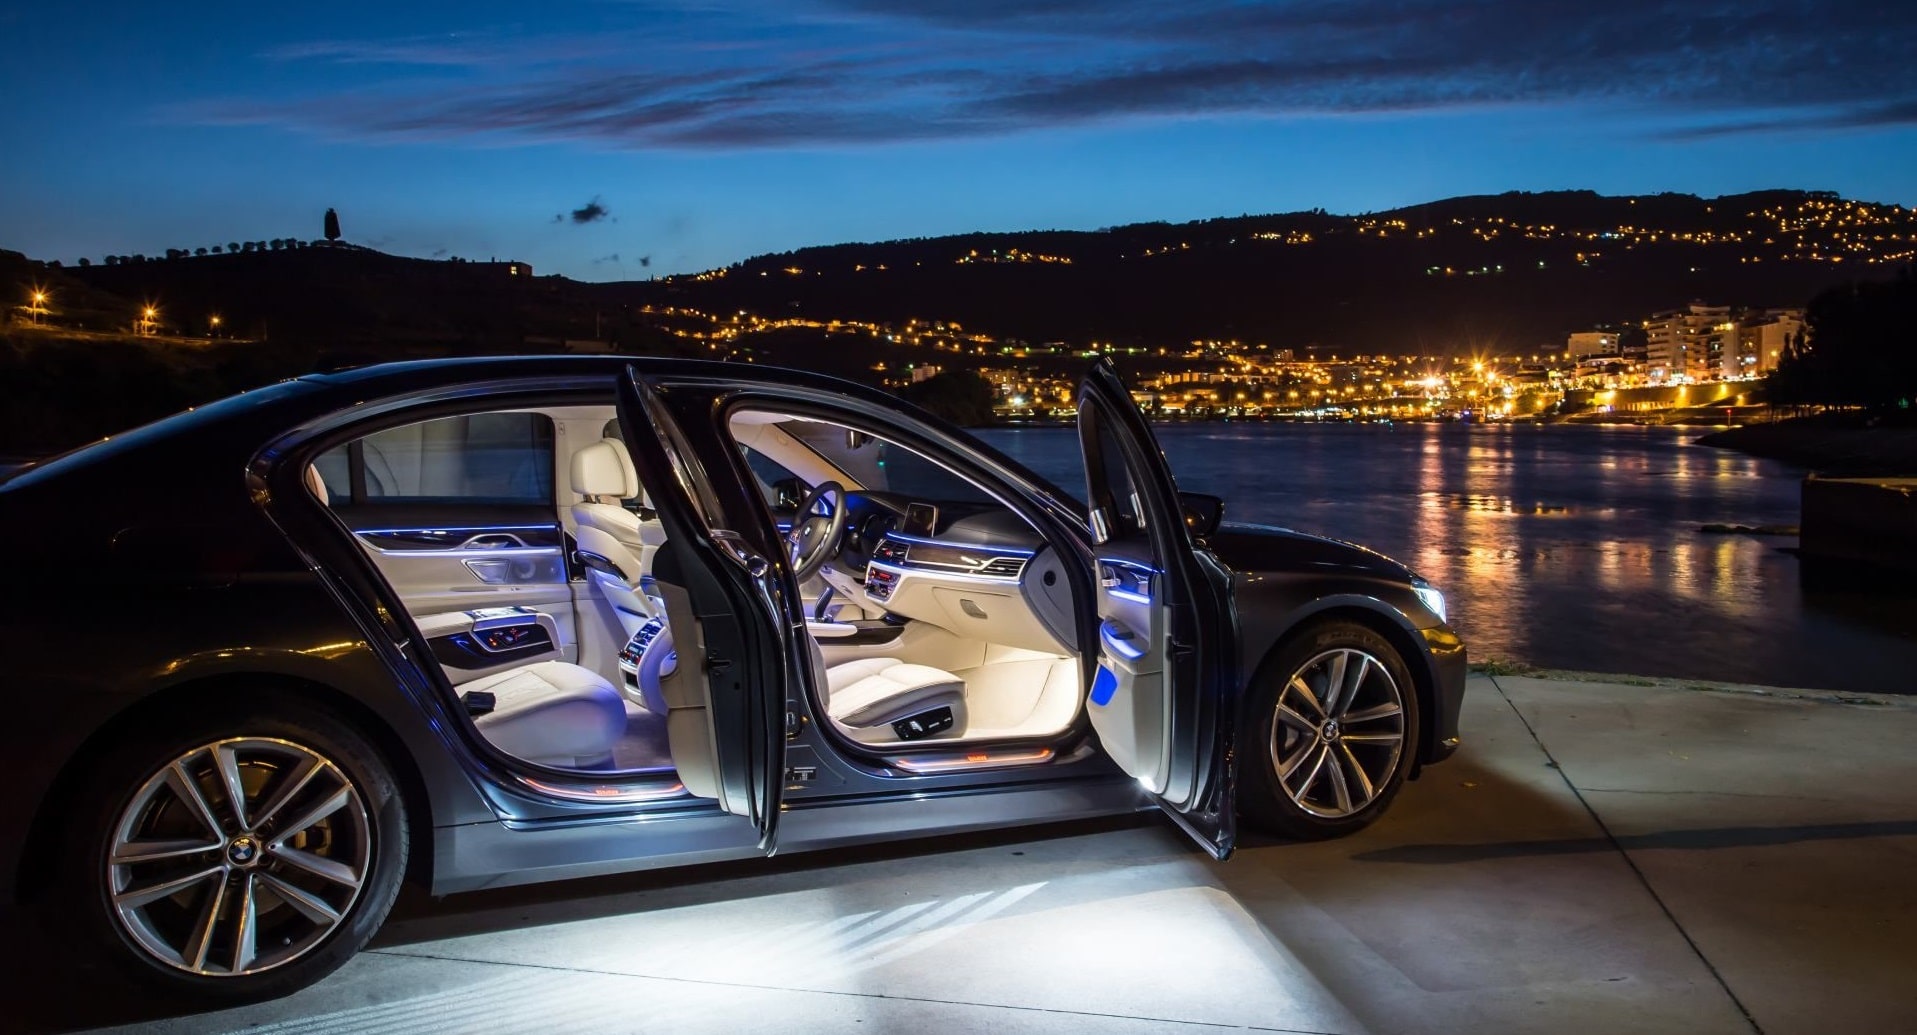 Luxury car stunning image of fully light interior against city skyline at dusk